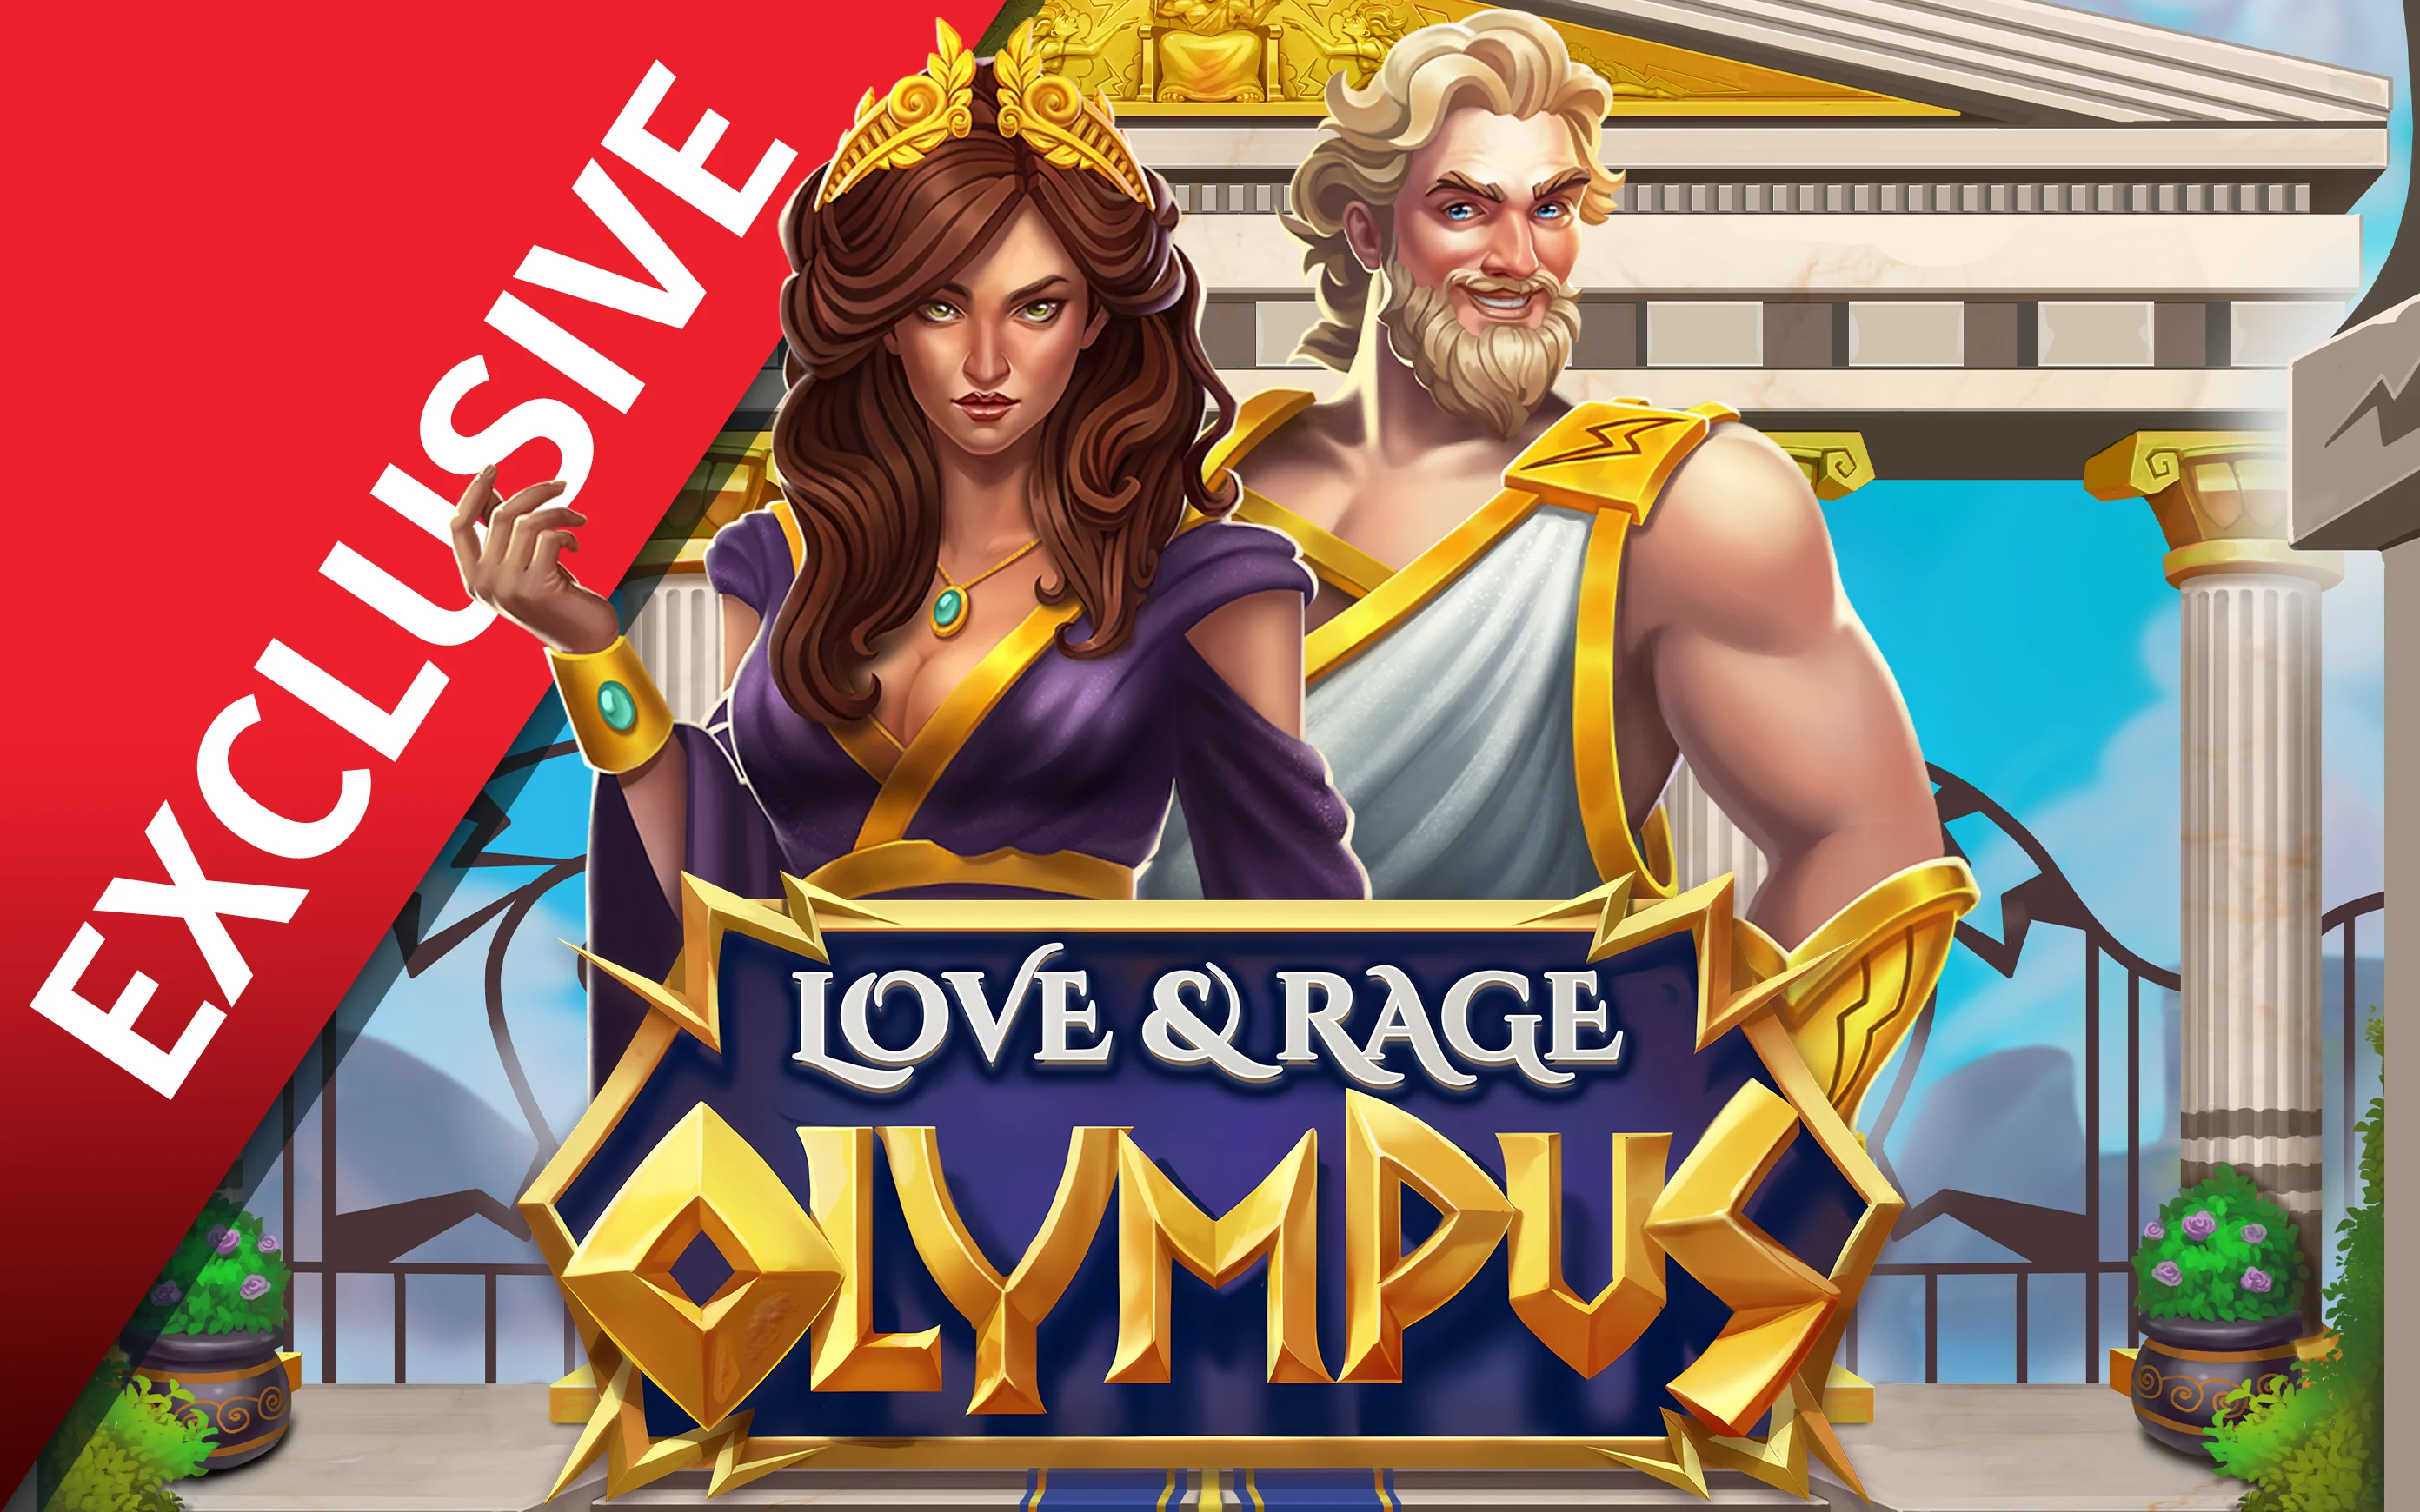 Spil Love and Rage – Olympus på Starcasino.be online kasino
